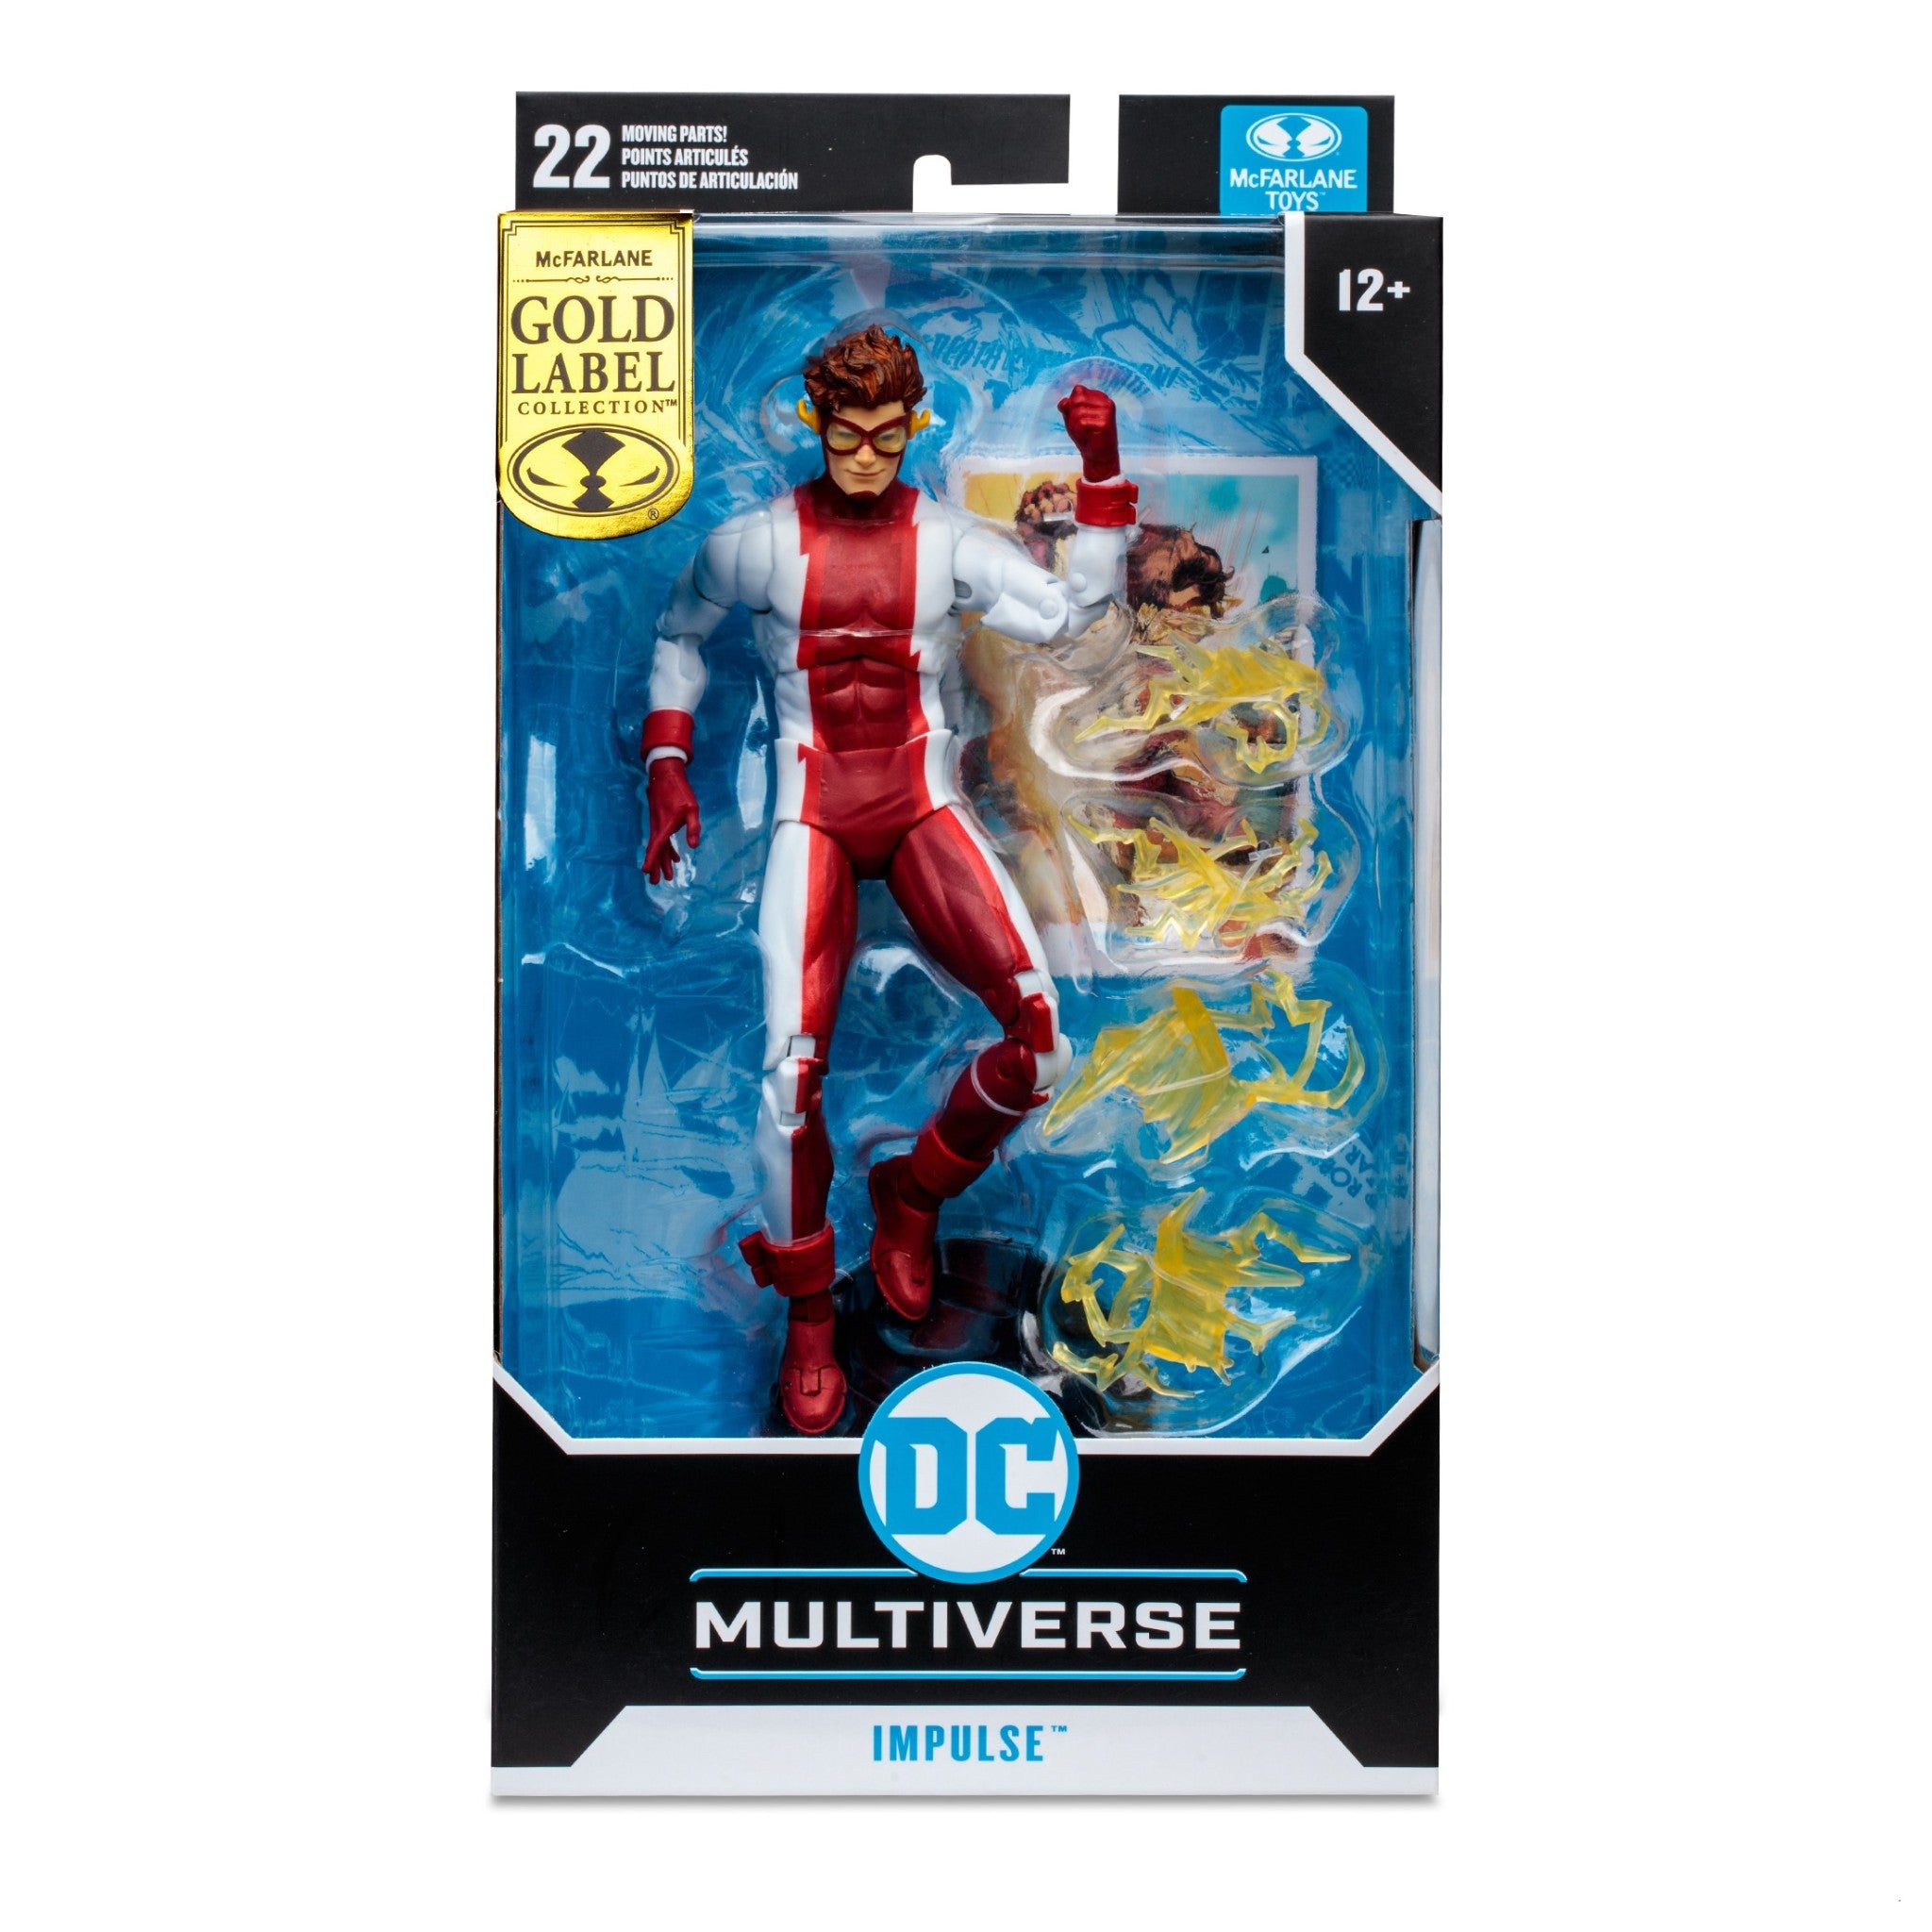 DC Multiverse Flash War Impulse Gold Label - McFarlane Toys